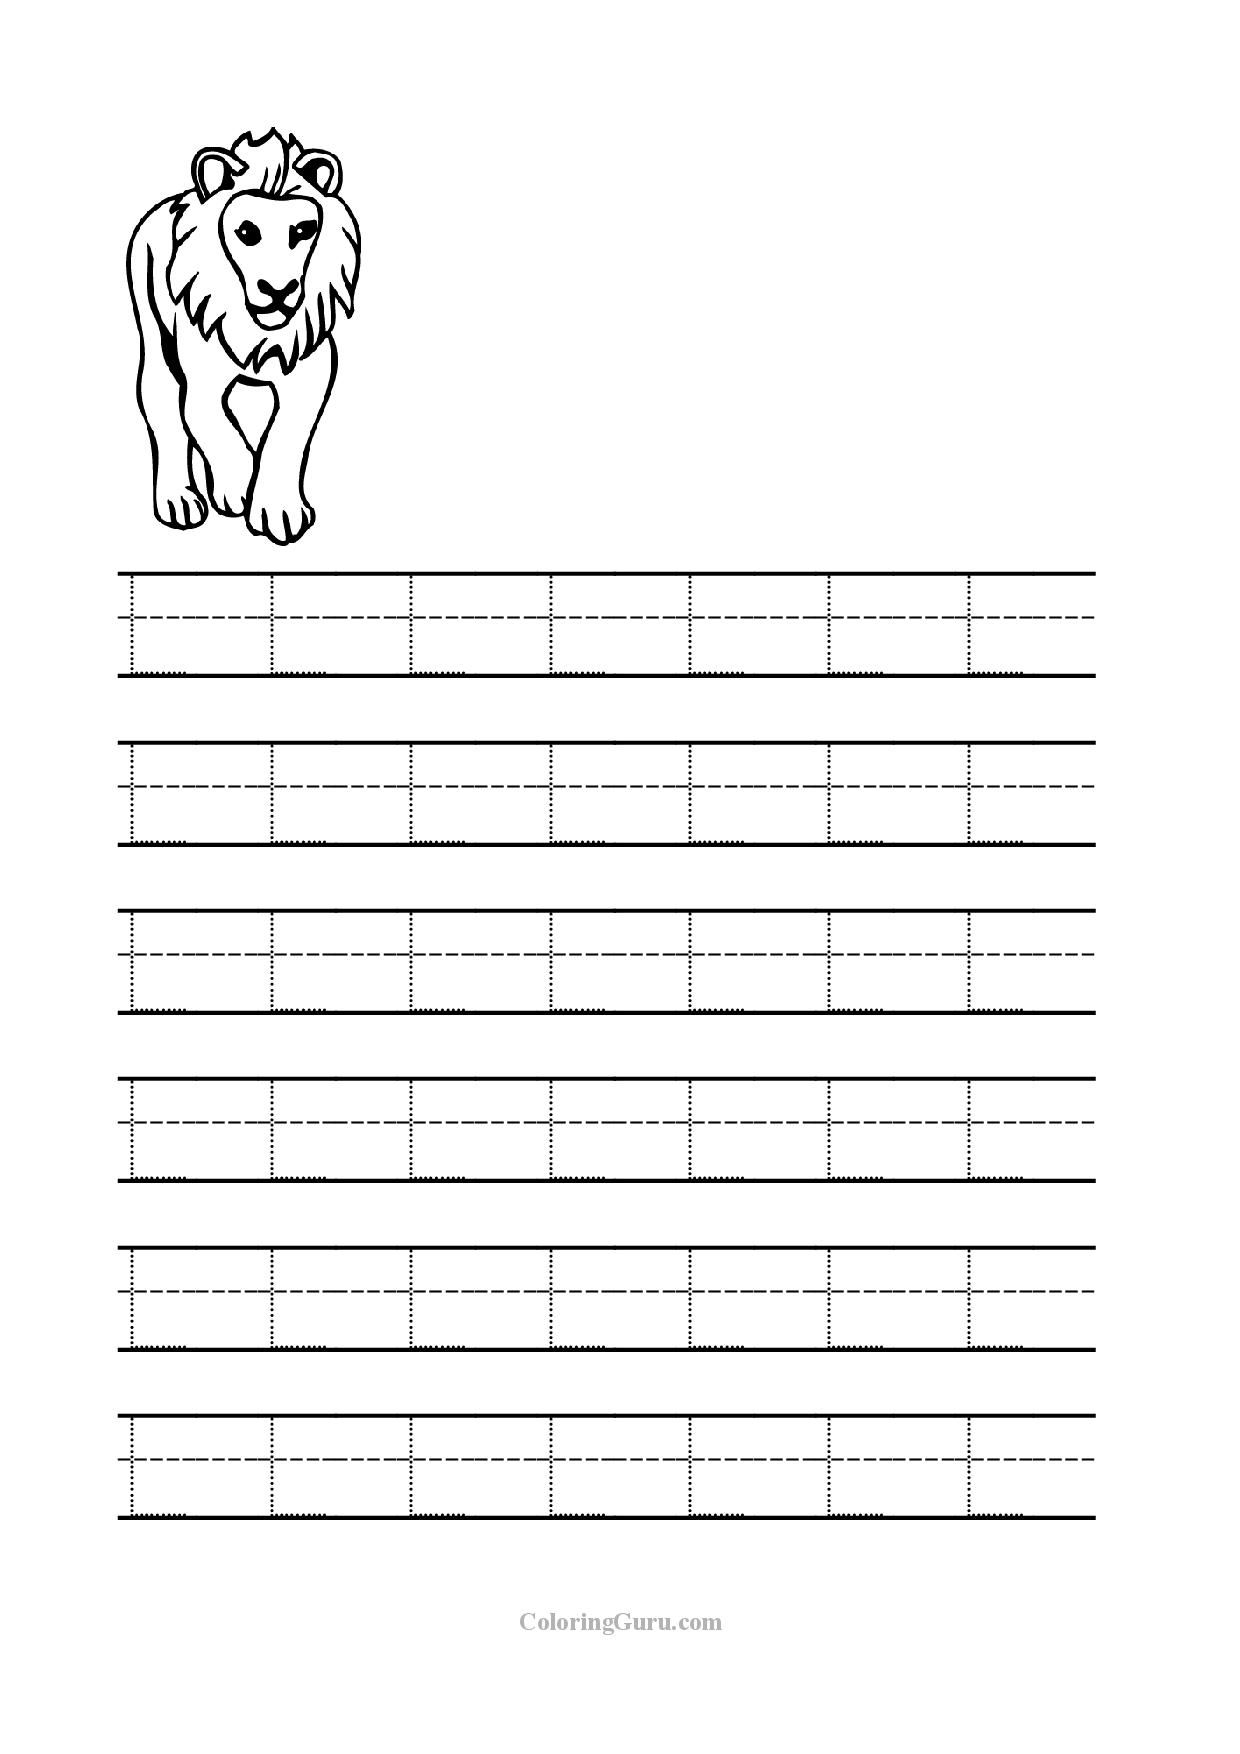 Free Printable Tracing Letter L Worksheets For Preschool regarding Letter L Tracing Sheet